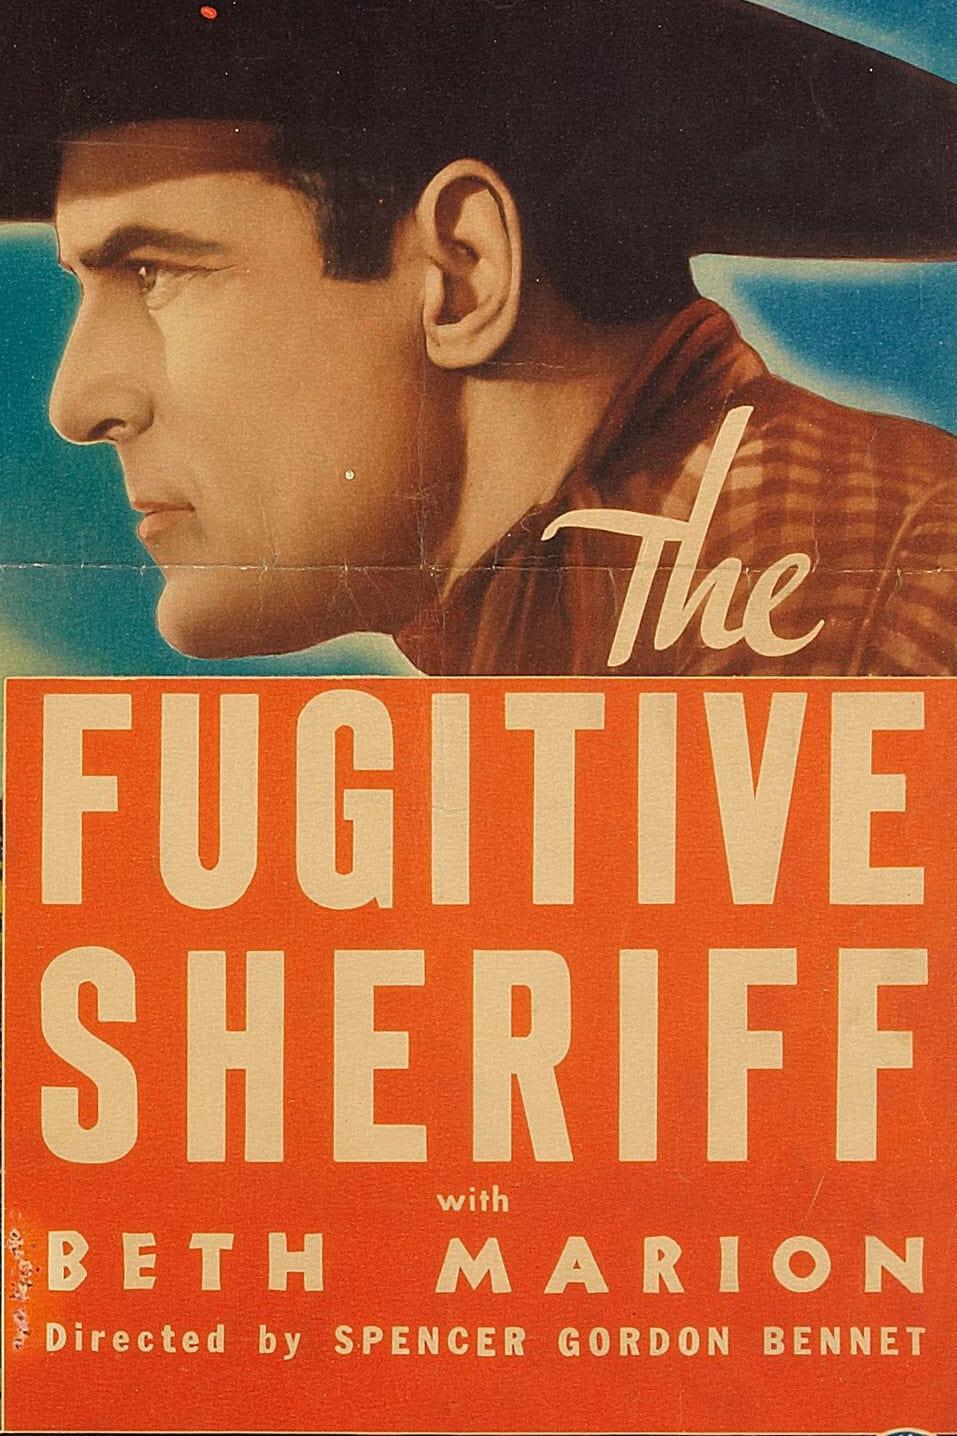 The Fugitive Sheriff poster